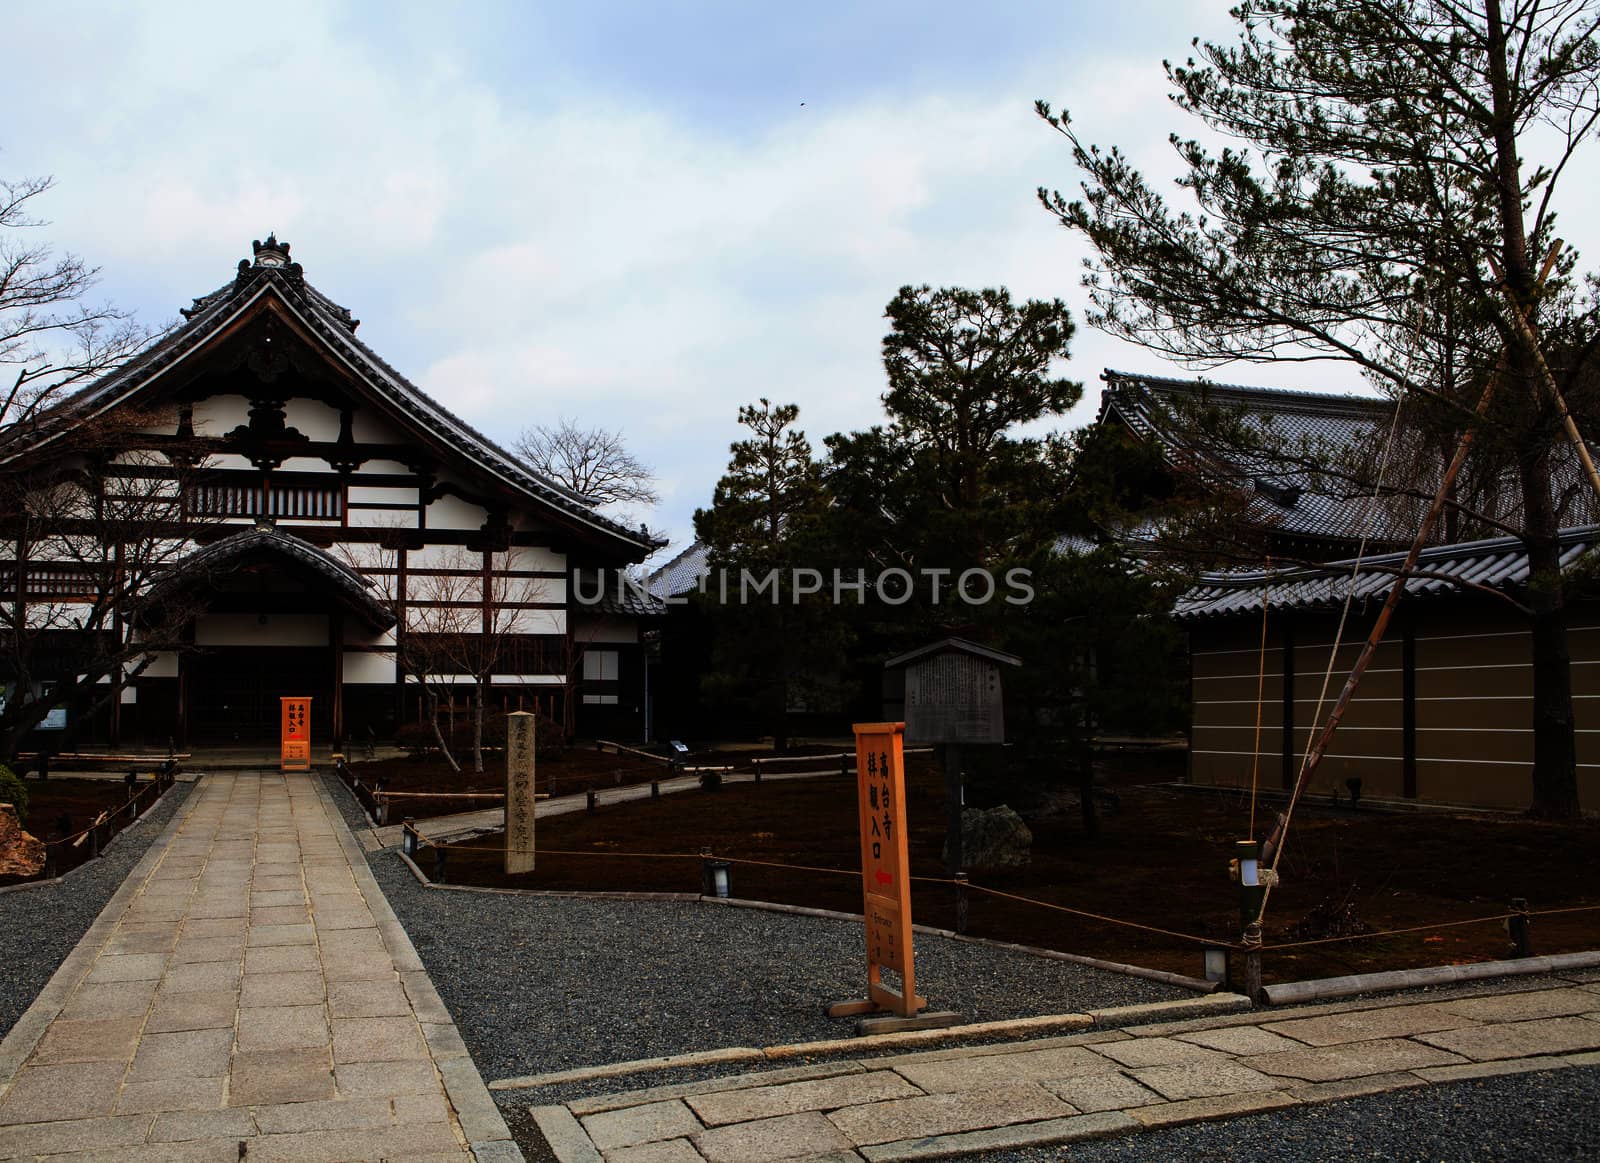  Kodai-ji temple by thanomphong